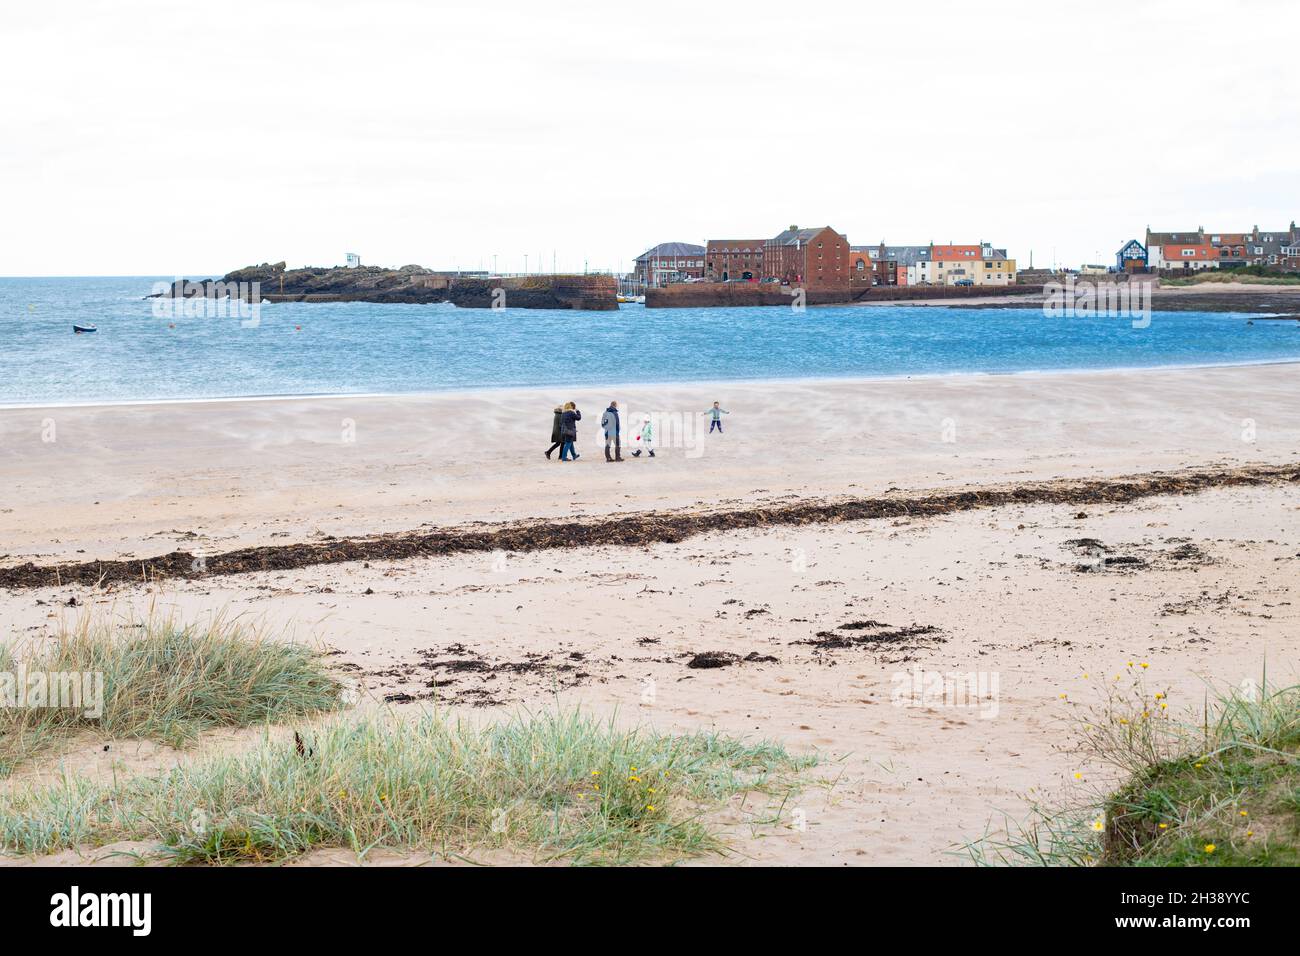 West Beach, North Berwick, Scotland, UK - family group walking along the beach on windy day Stock Photo